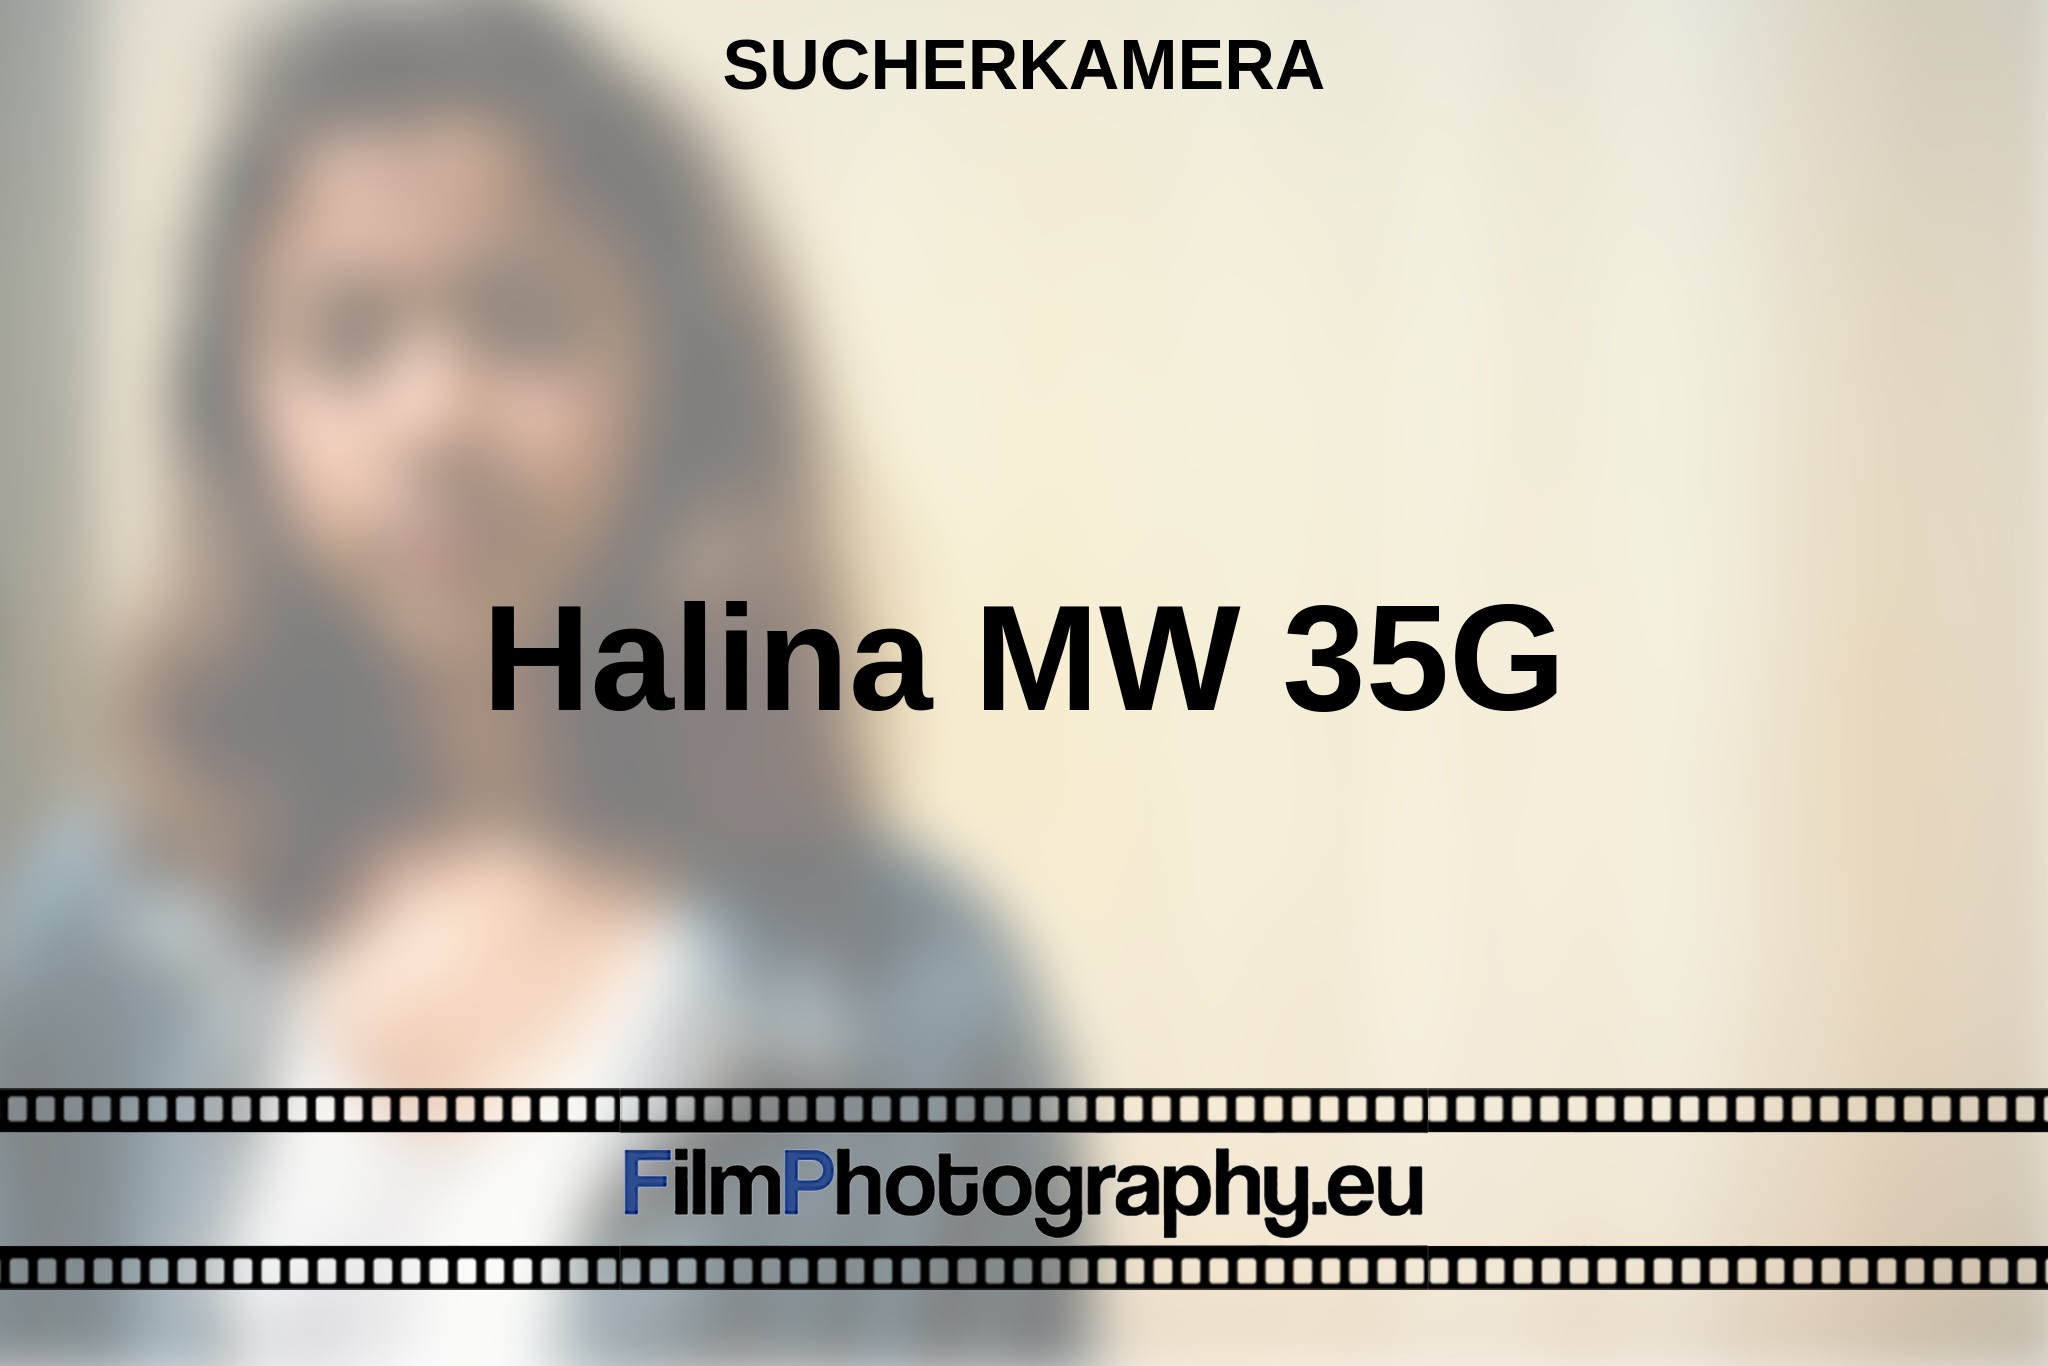 halina-mw-35g-sucherkamera-bnv.jpg